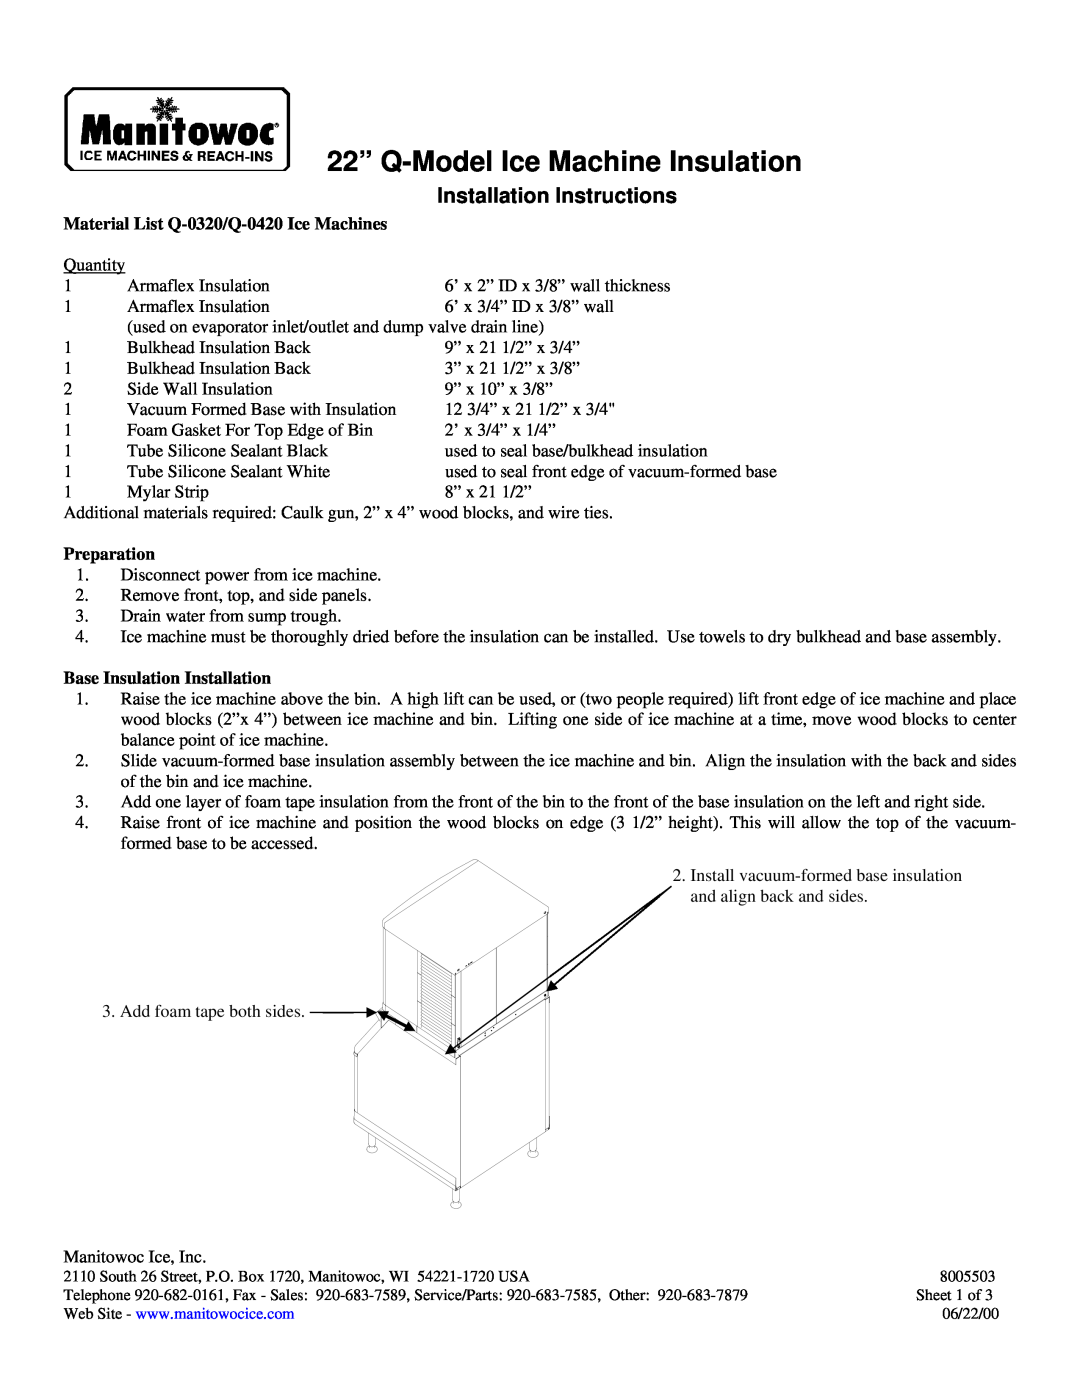 Manitowoc Ice installation instructions Material List Q-0320/Q-0420Ice Machines, Preparation, Installation Instructions 